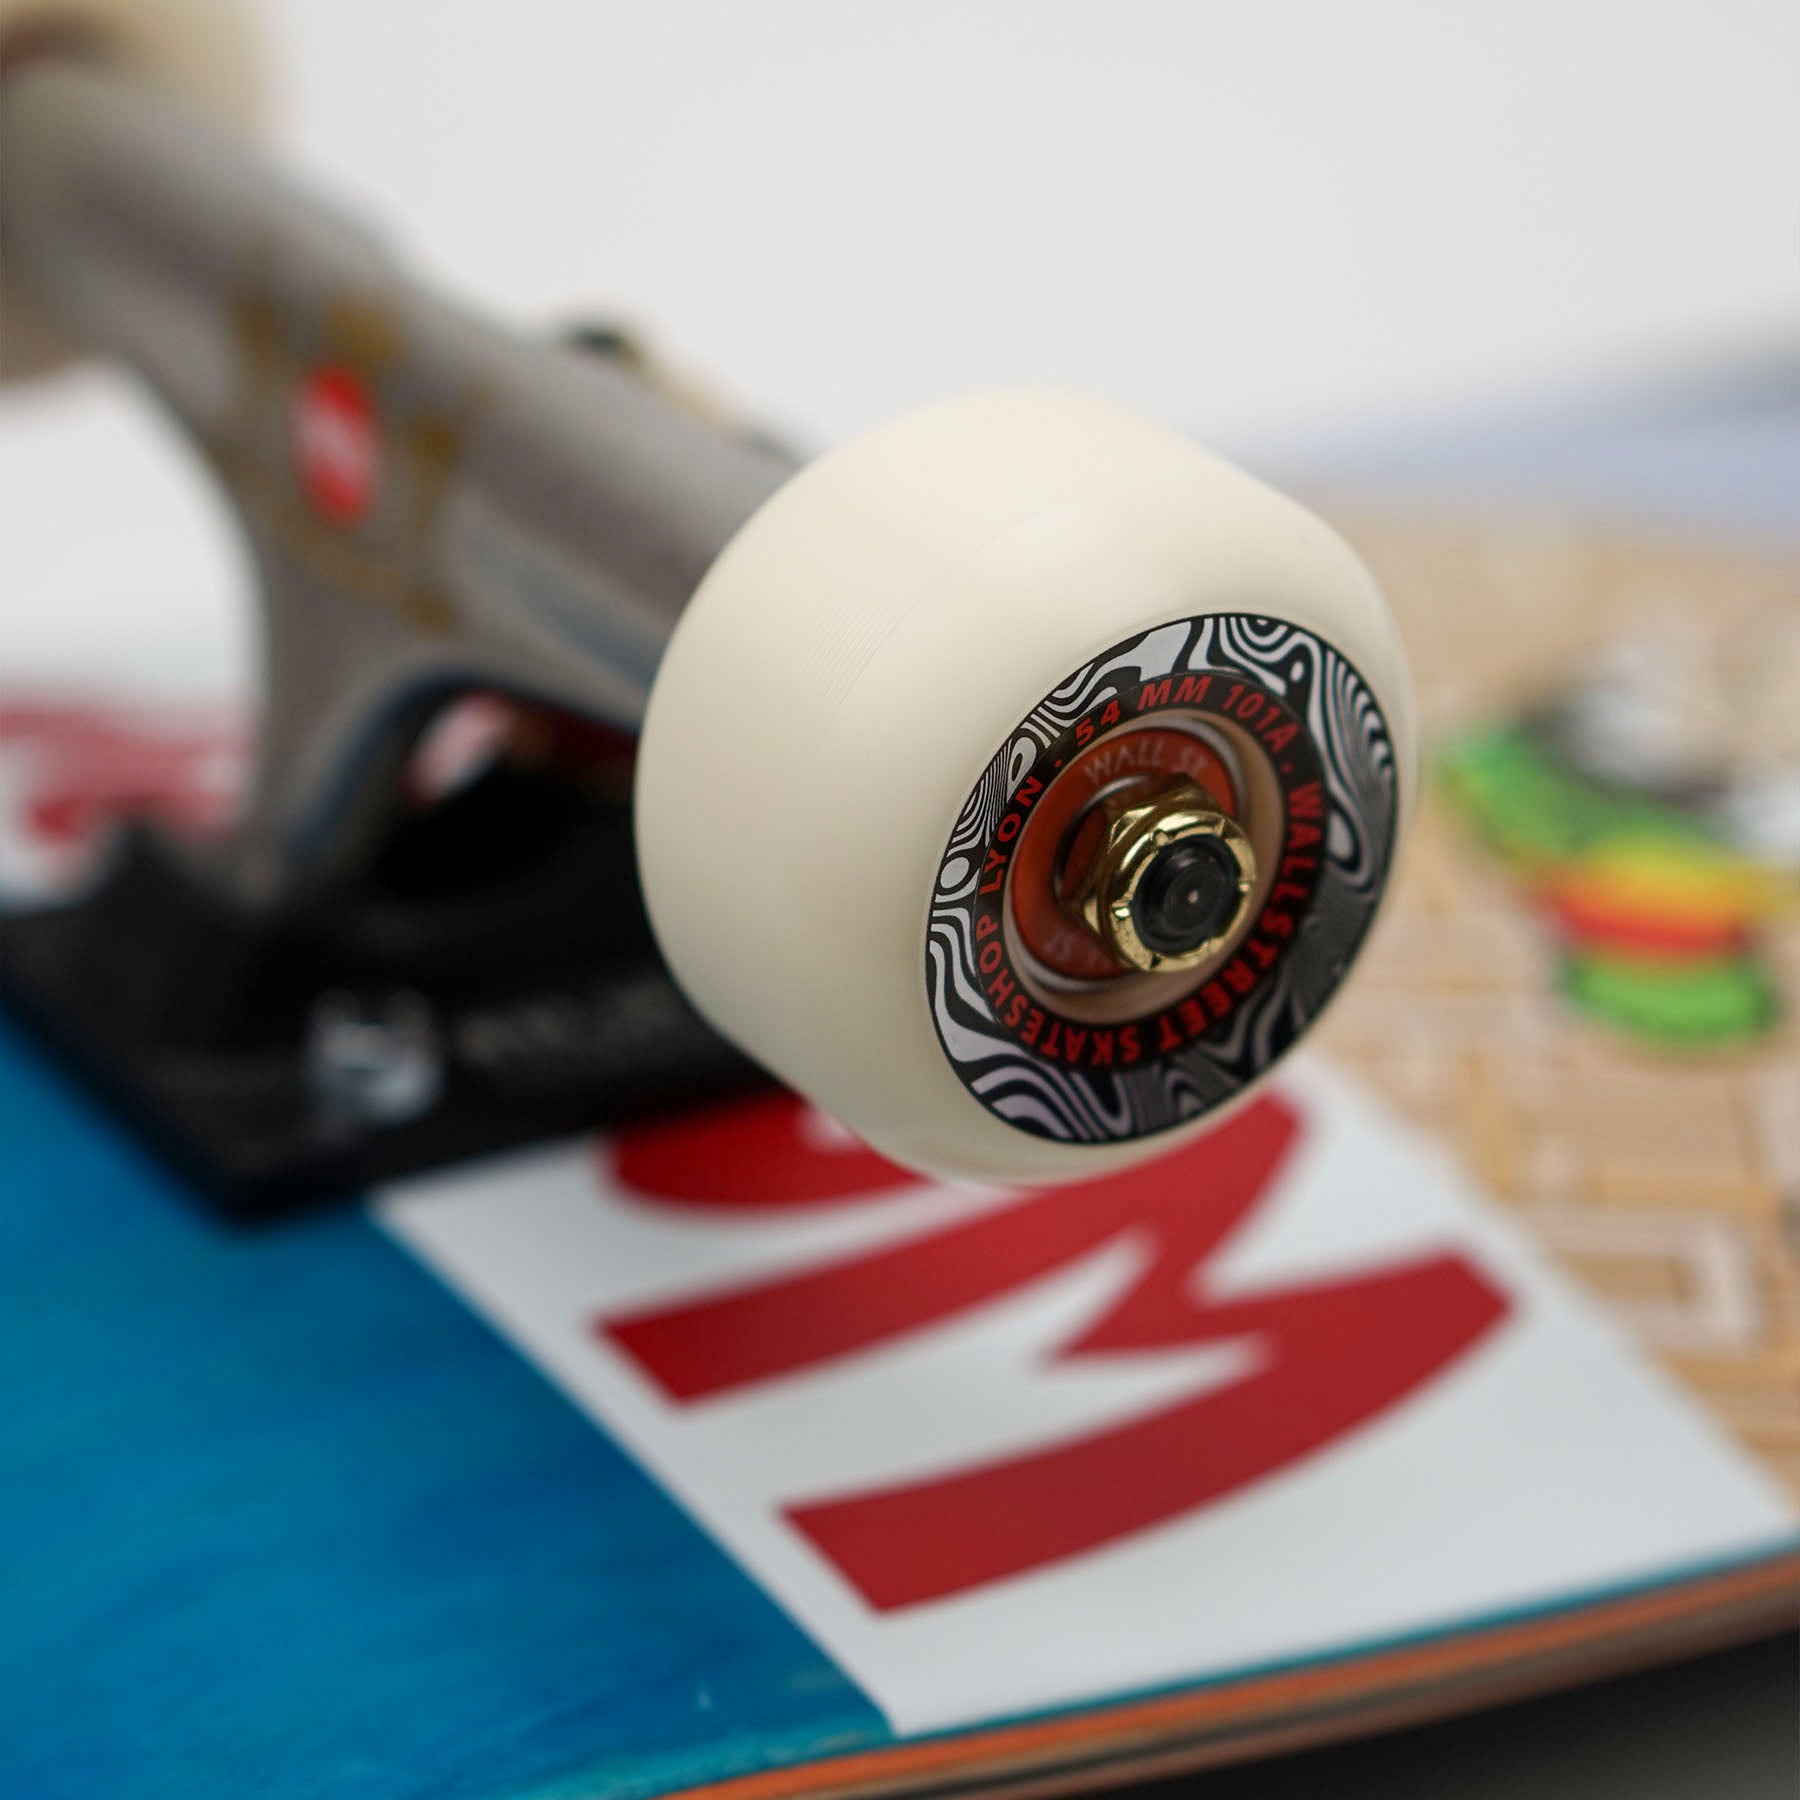 Wallstreet Skateboard Complet - Les Gaulois Champix Premium